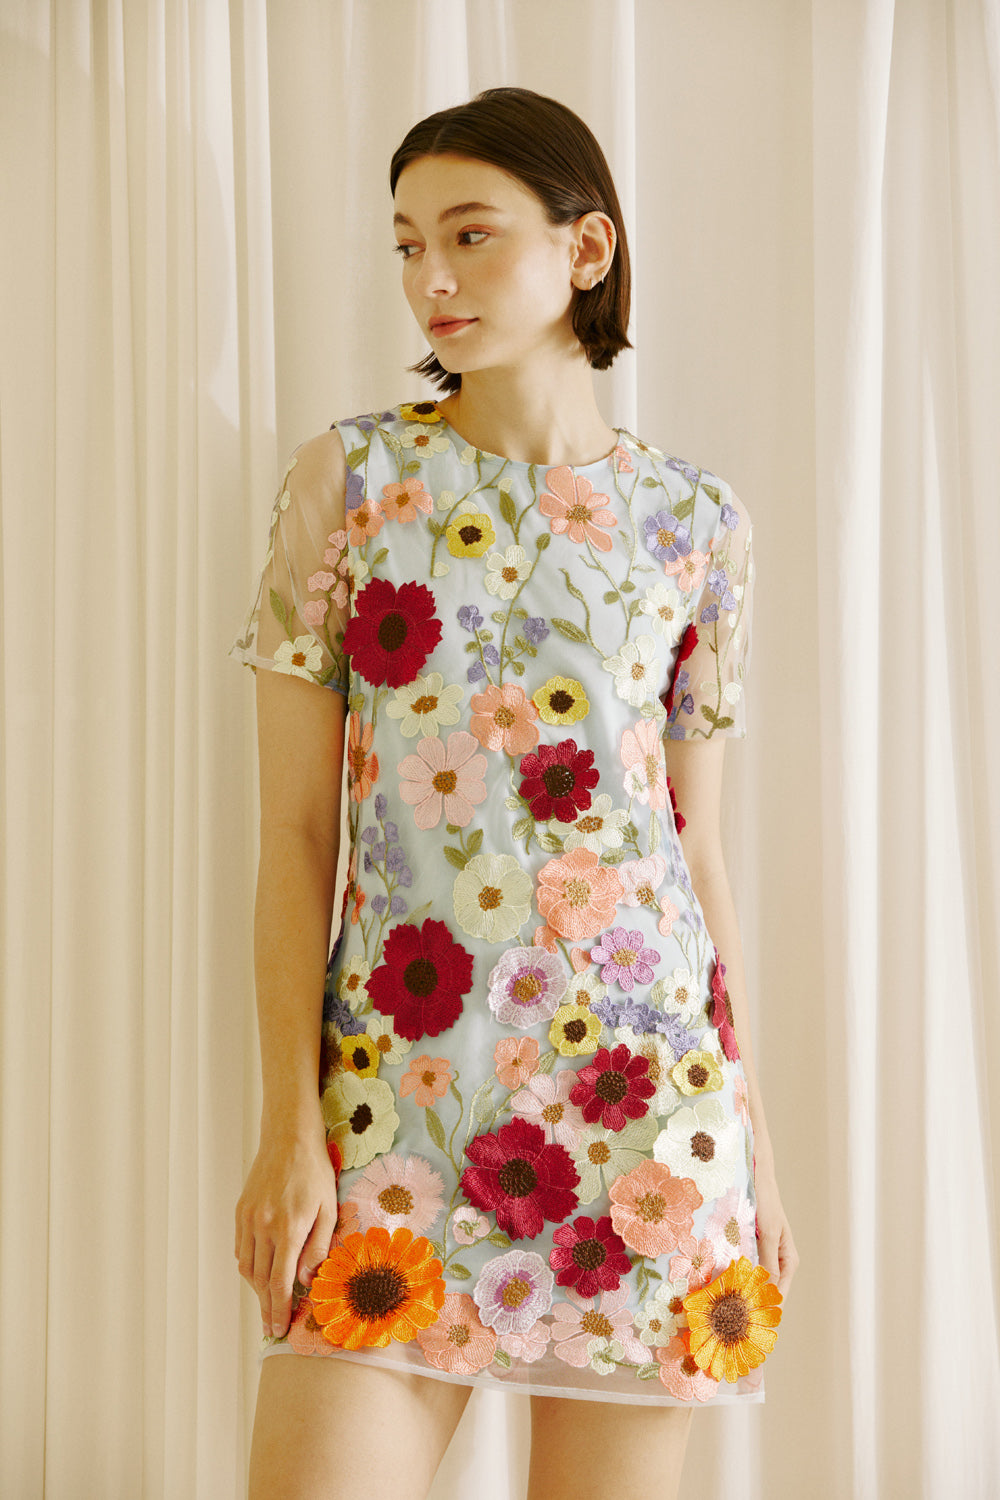 Aria Floral Dress